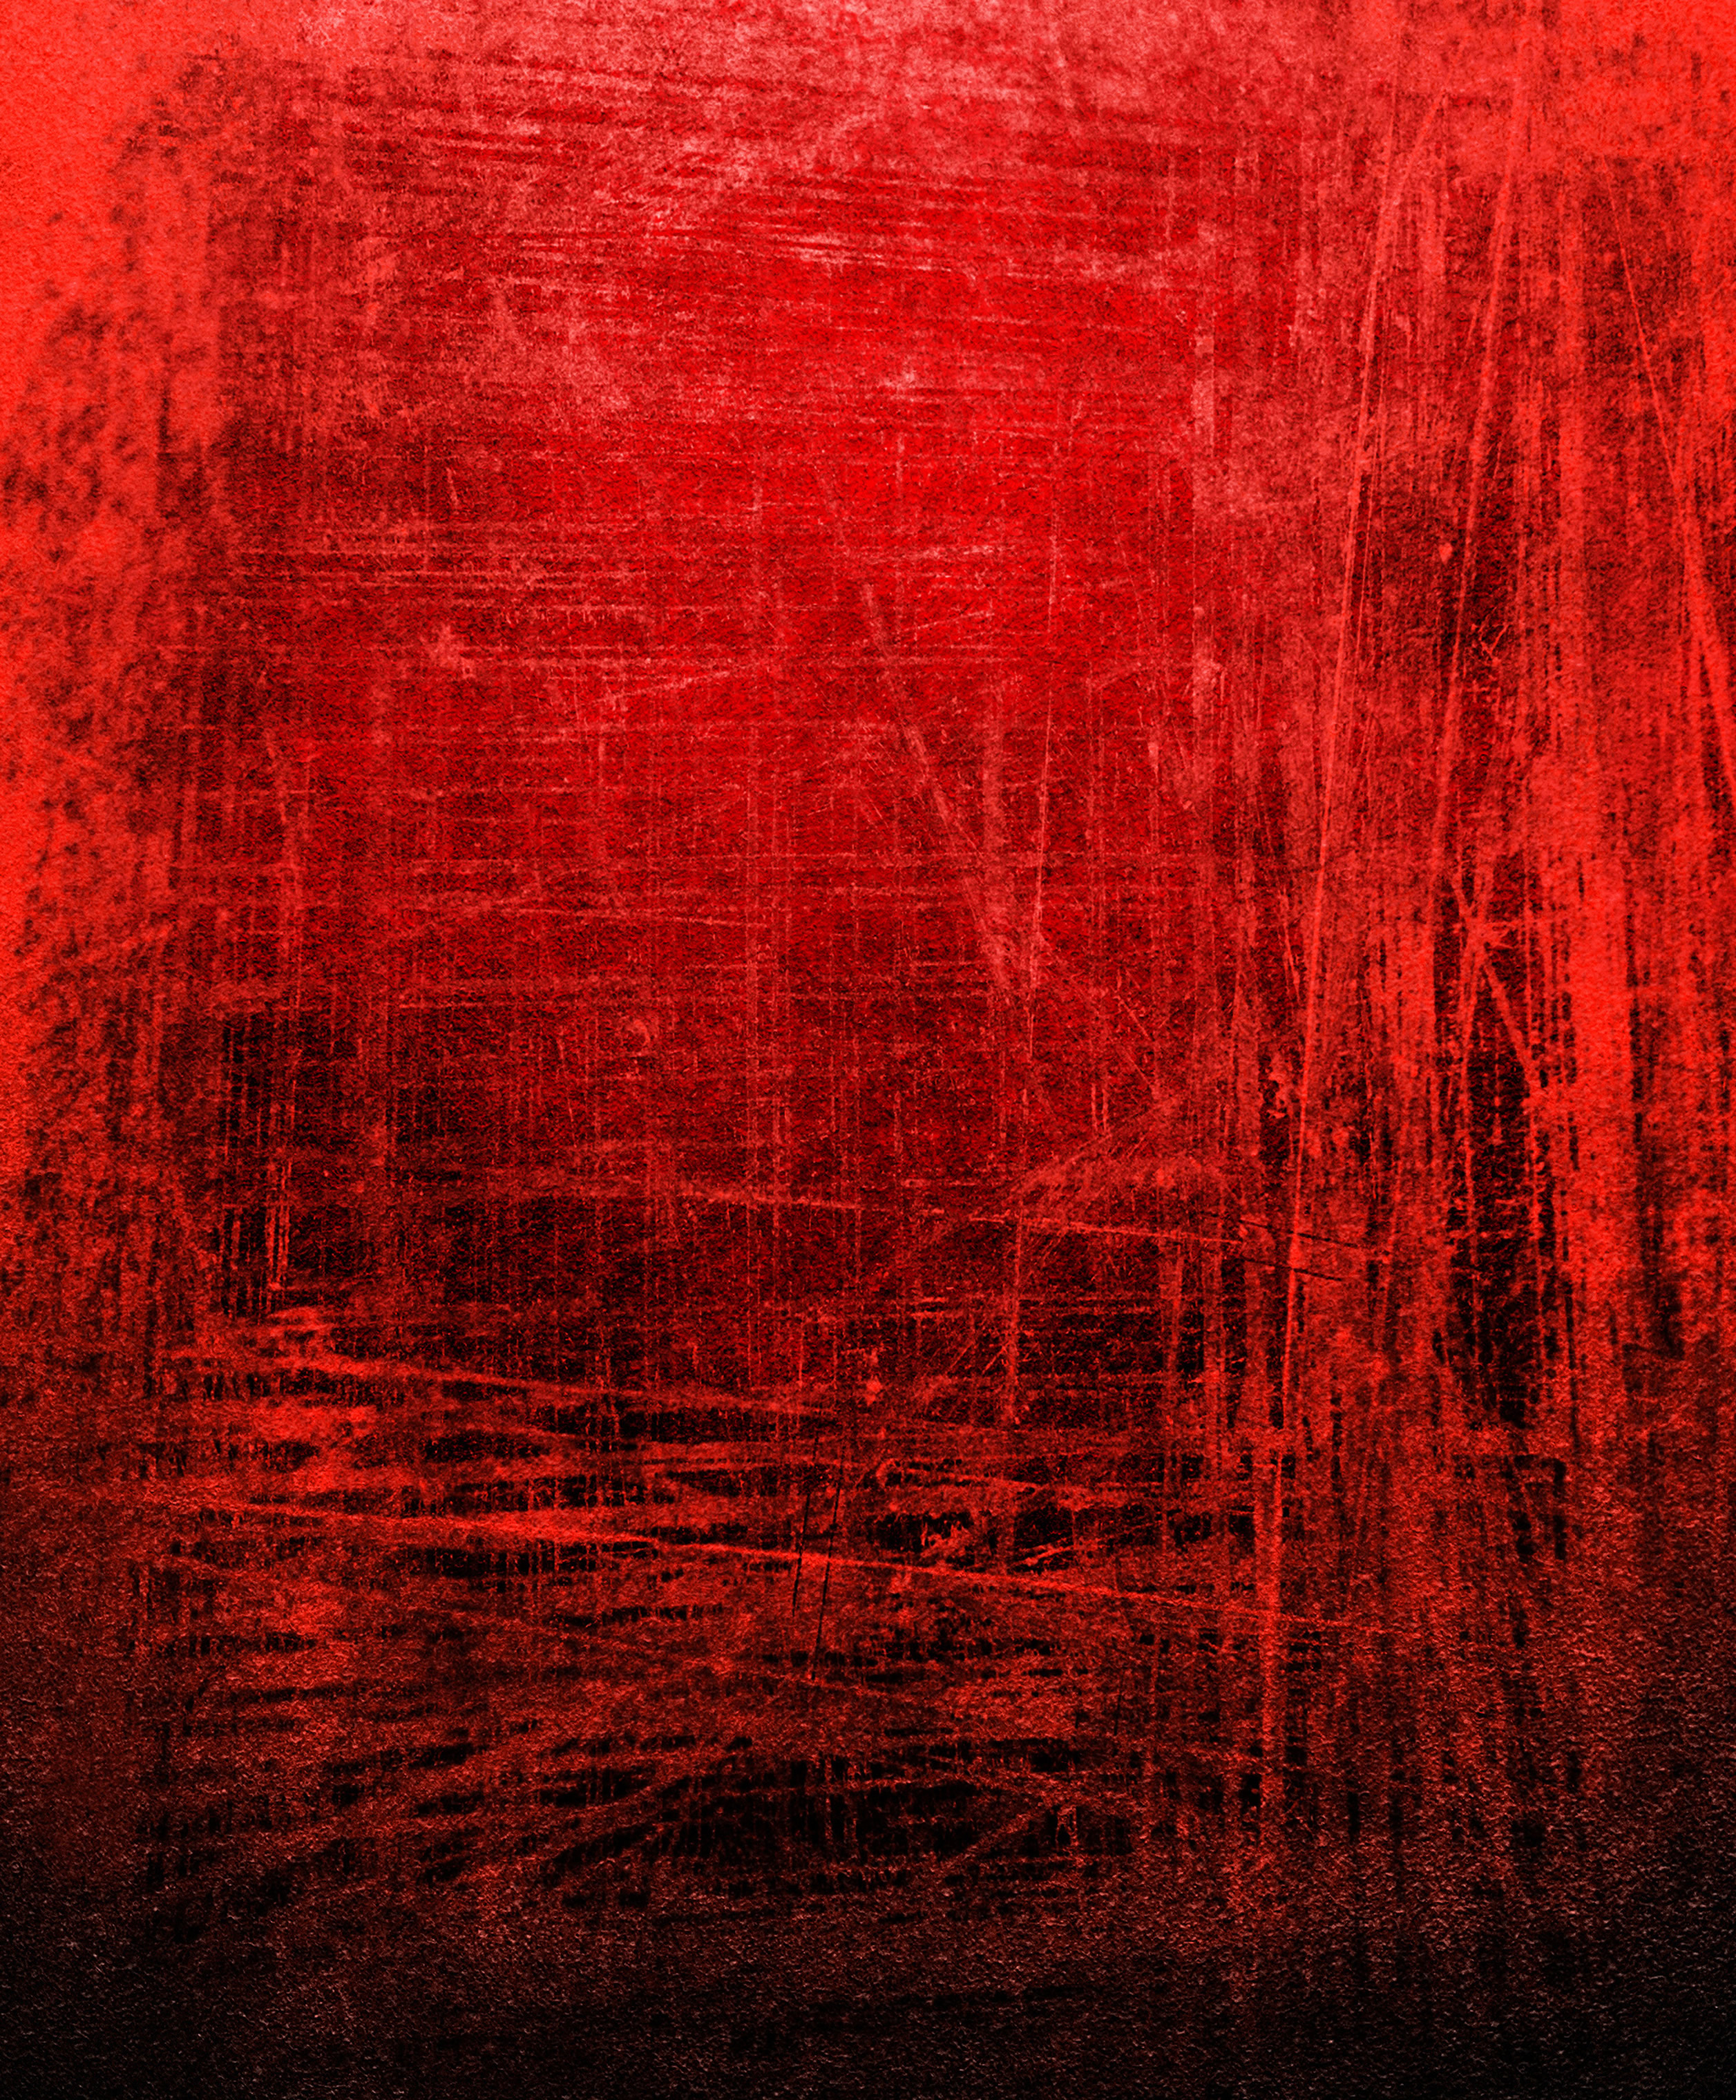 red paint, texture paints, background, download photo, red color paint texture background